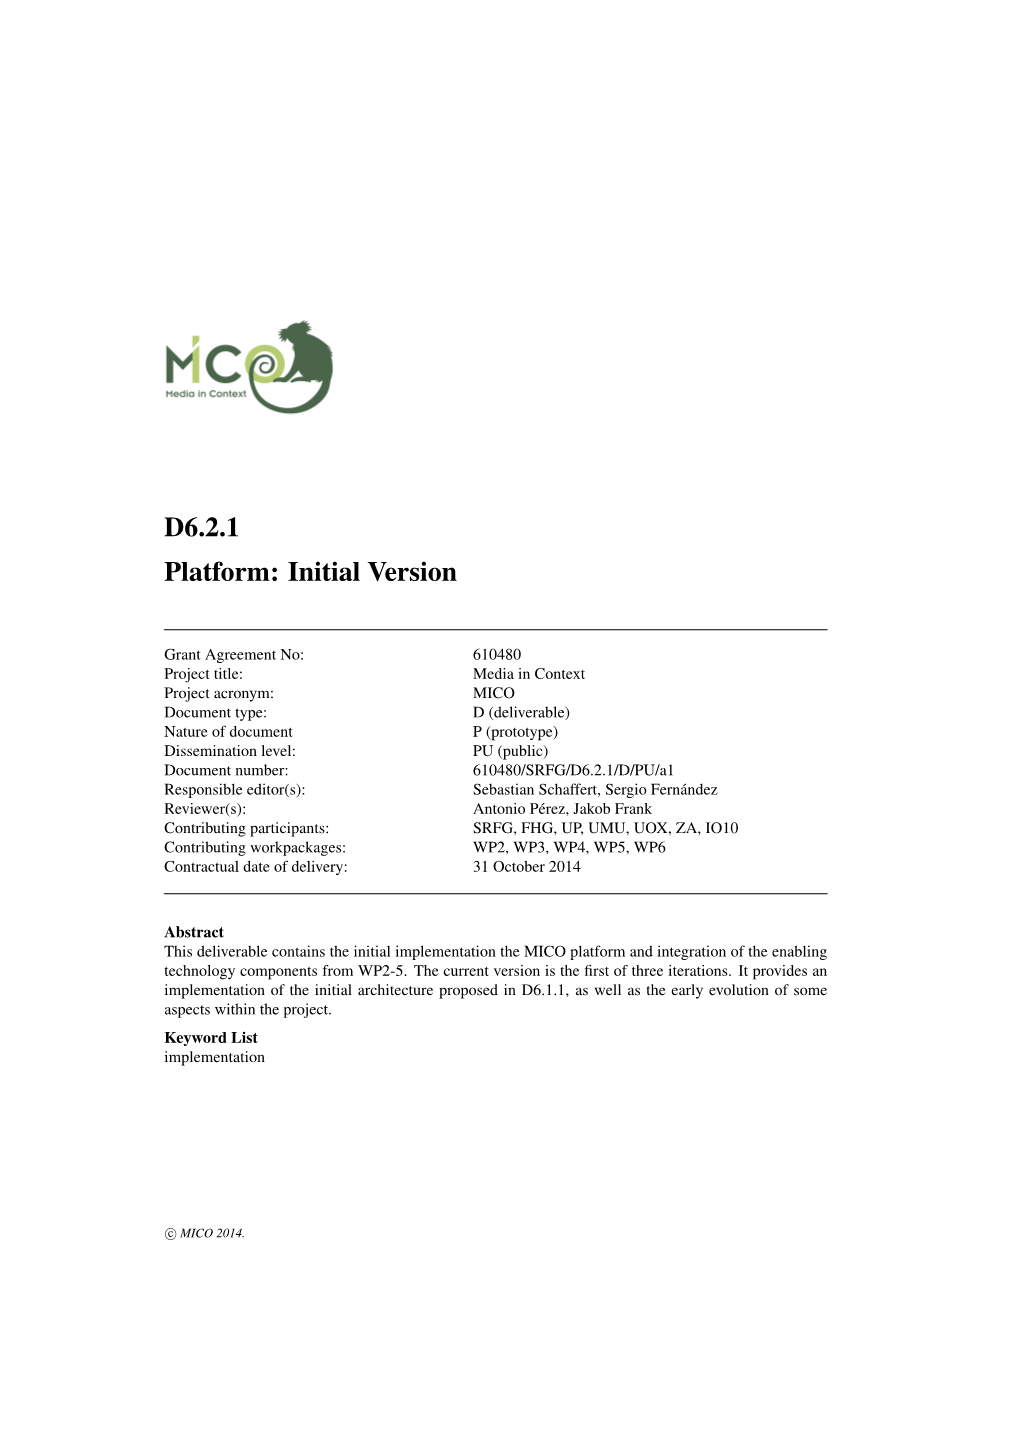 D6.2.1 Platform: Initial Version